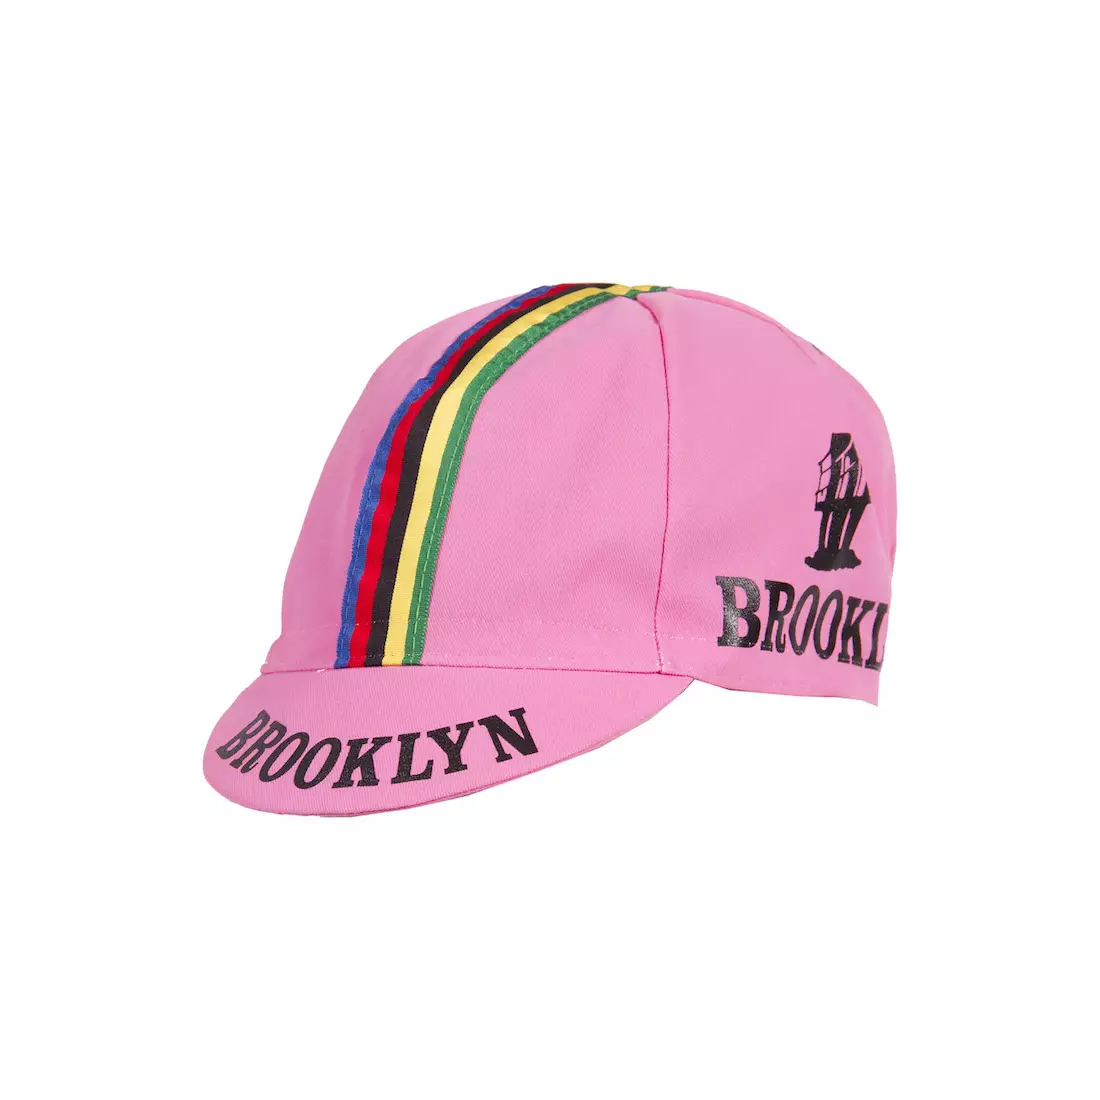 GIORDANA SS18 cycling cap - Brooklyn - Giro Pink w/ Stripe tape GI-S6-COCA-BROK-GIRO one size